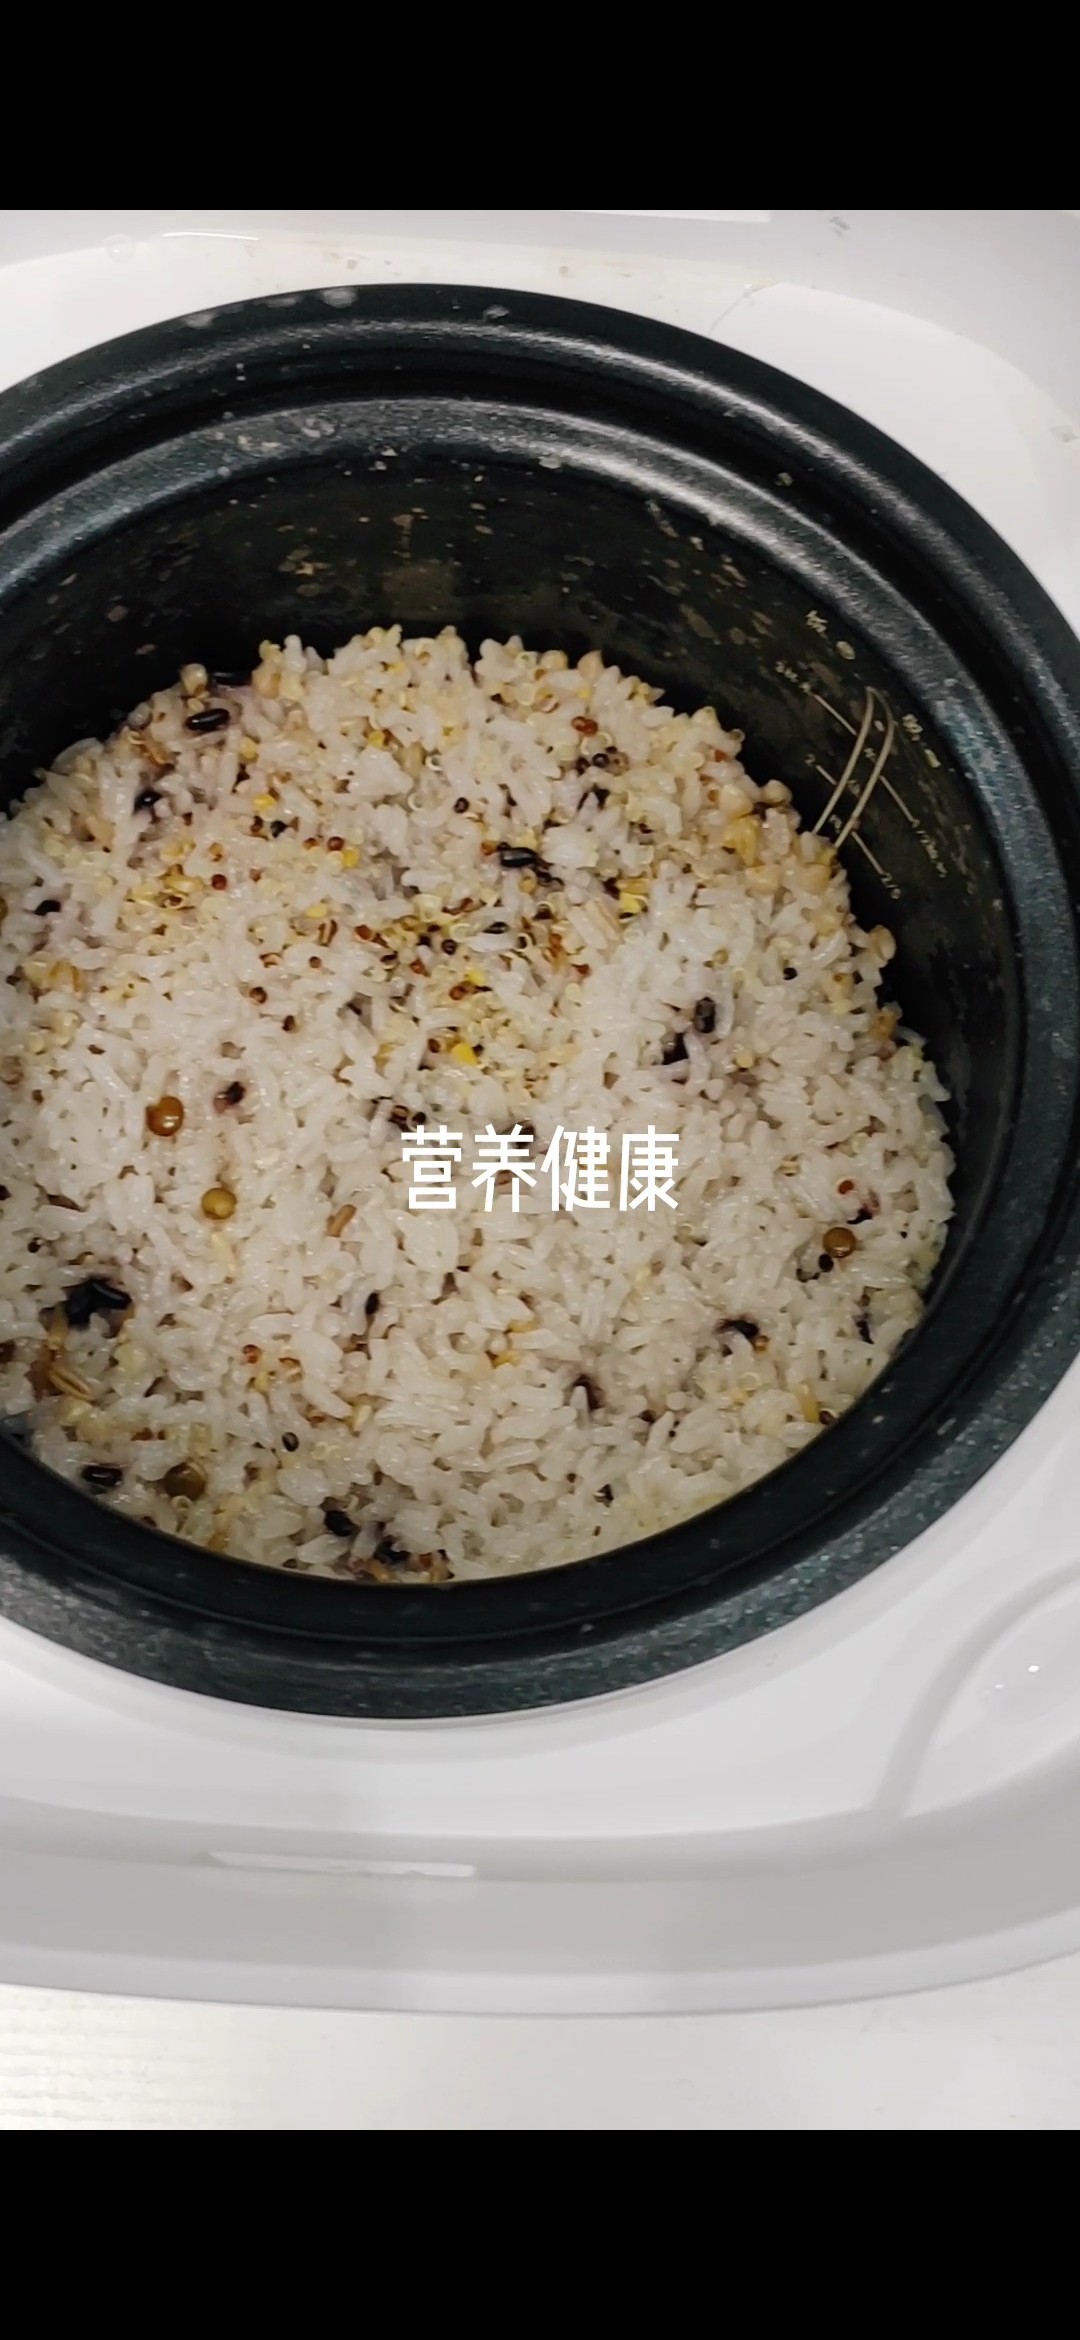 Miscellaneous Rice Balls recipe